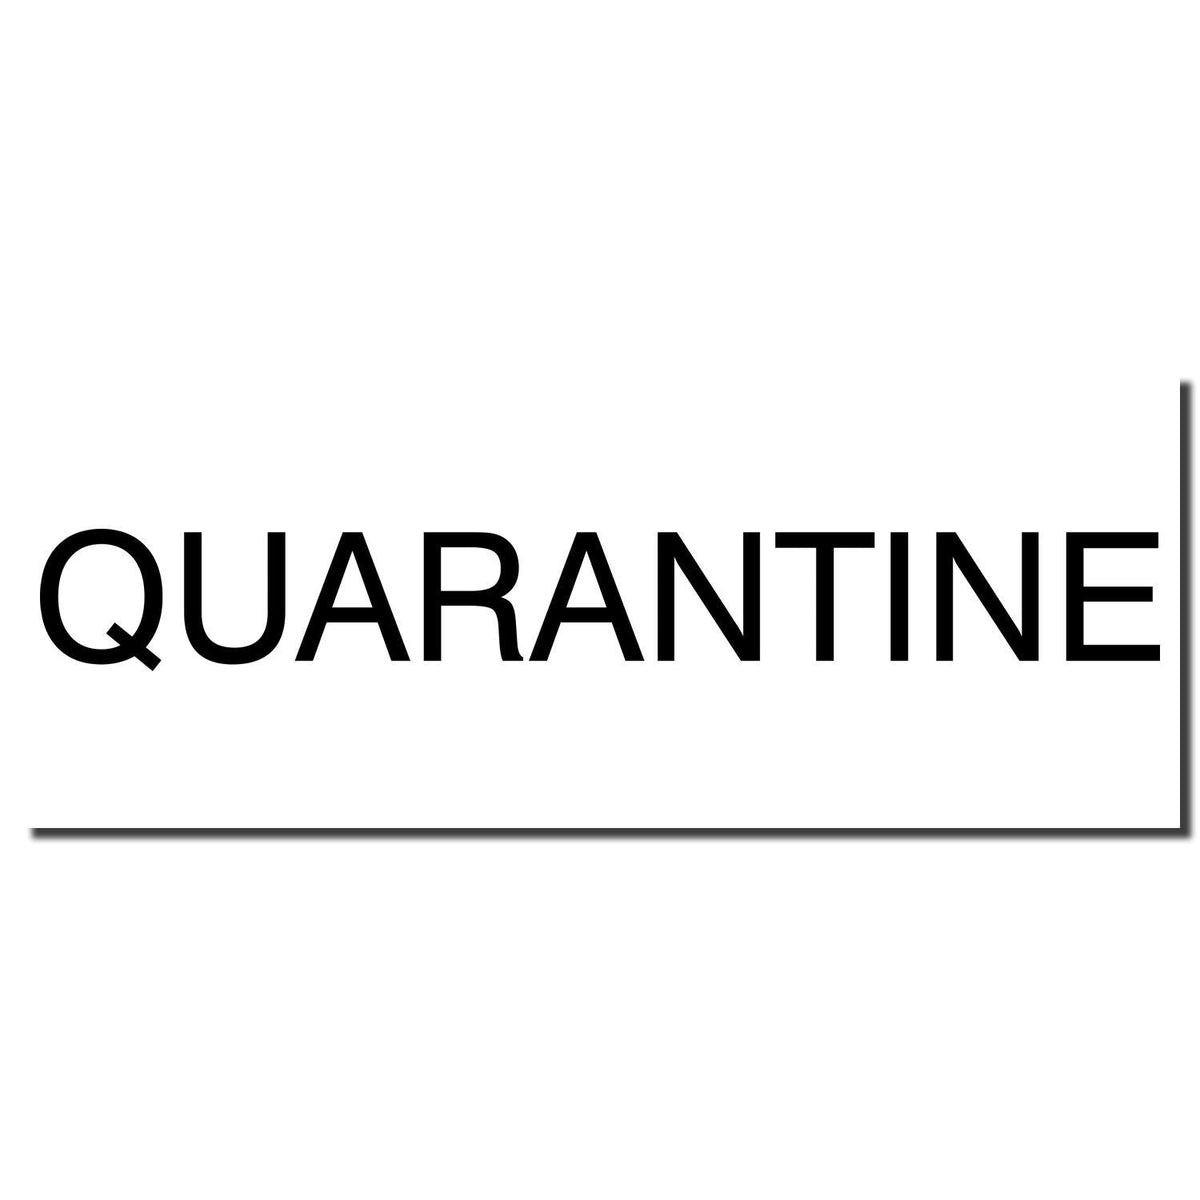 Enlarged Imprint Self-Inking Quarantine Stamp Sample